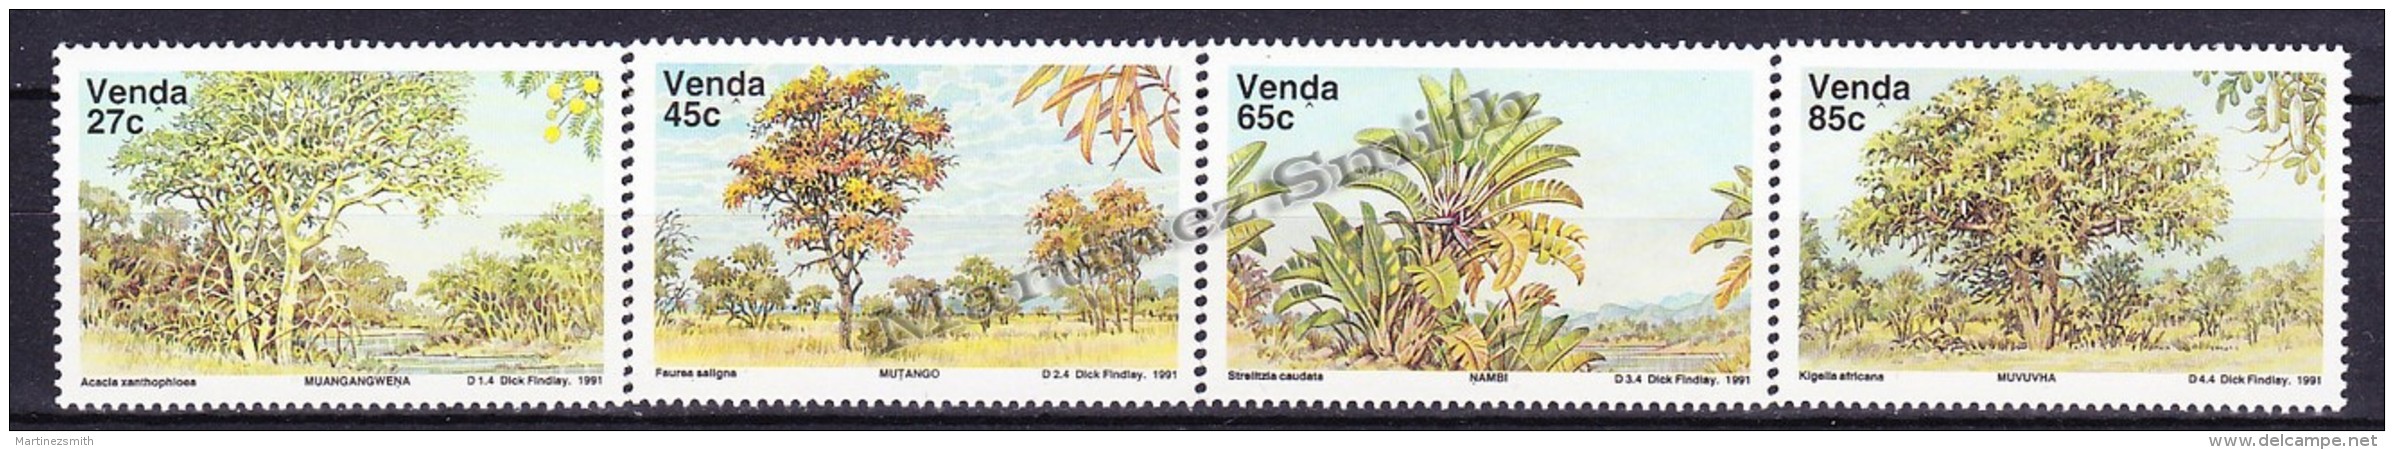 South Africa - Afrique Du Sud - Venda 1991 Yvert  229 -32, Flowers, Native Trees - MNH - Ungebraucht